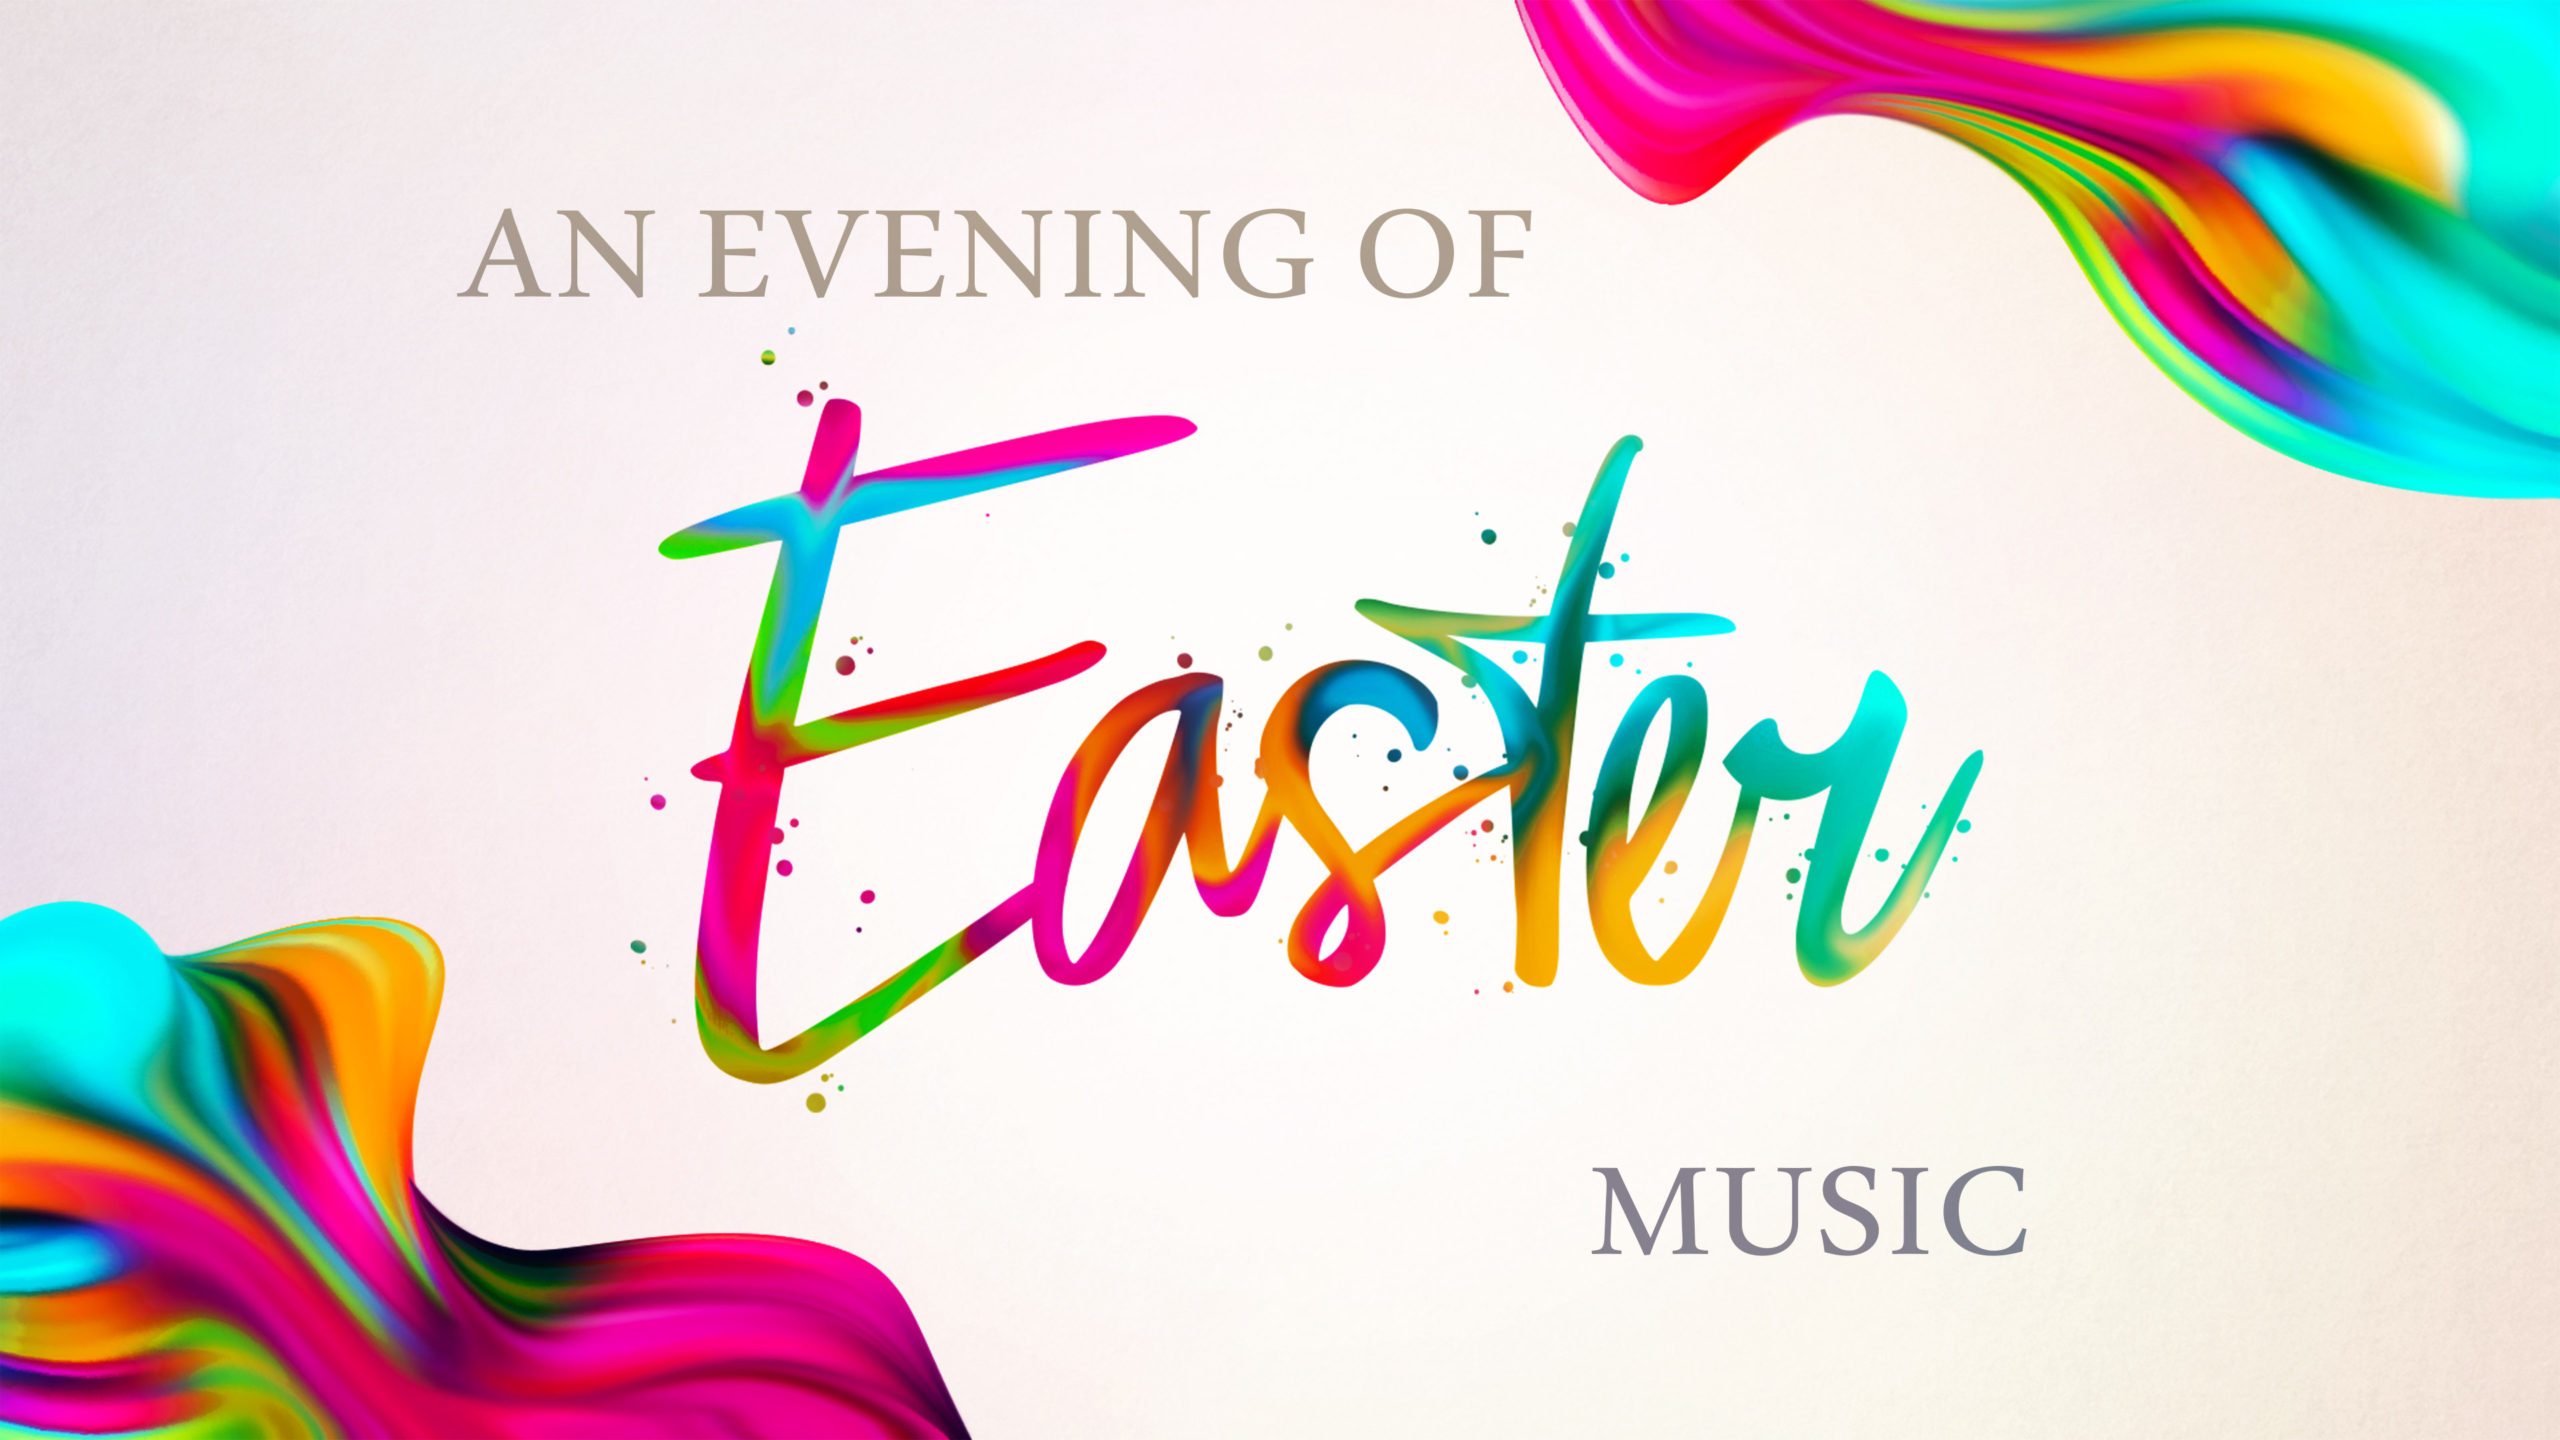 An Evening of Easter Music